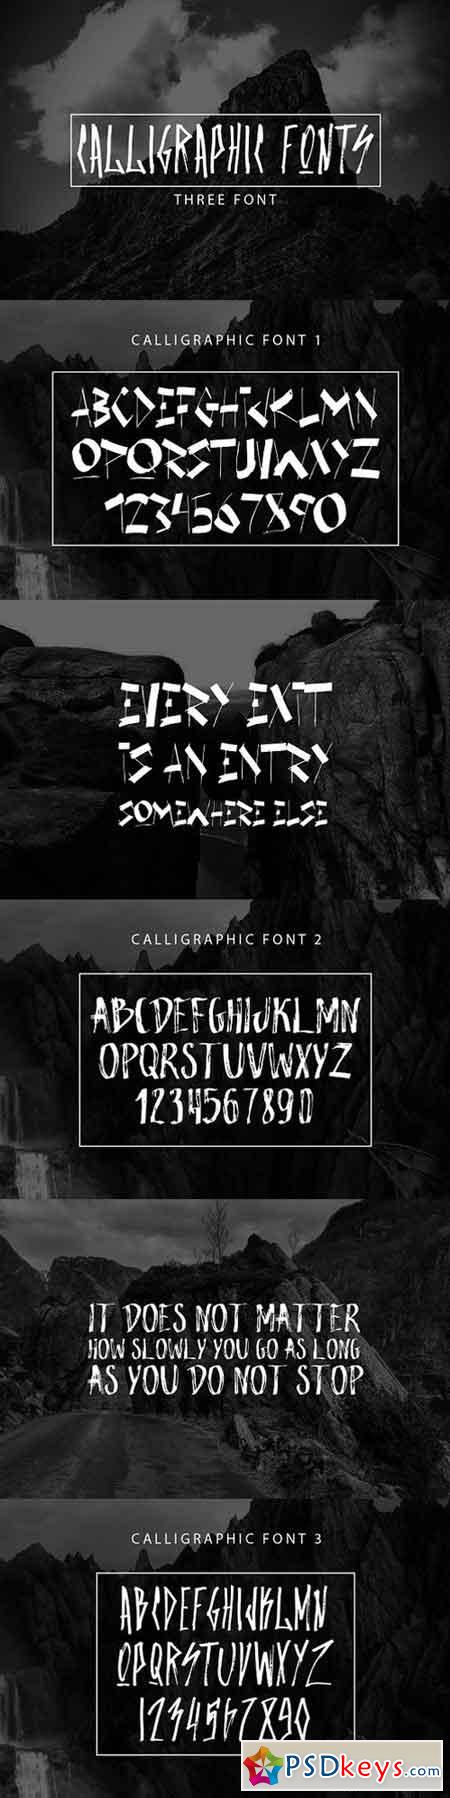 Set of three calligraphic fonts 1362228